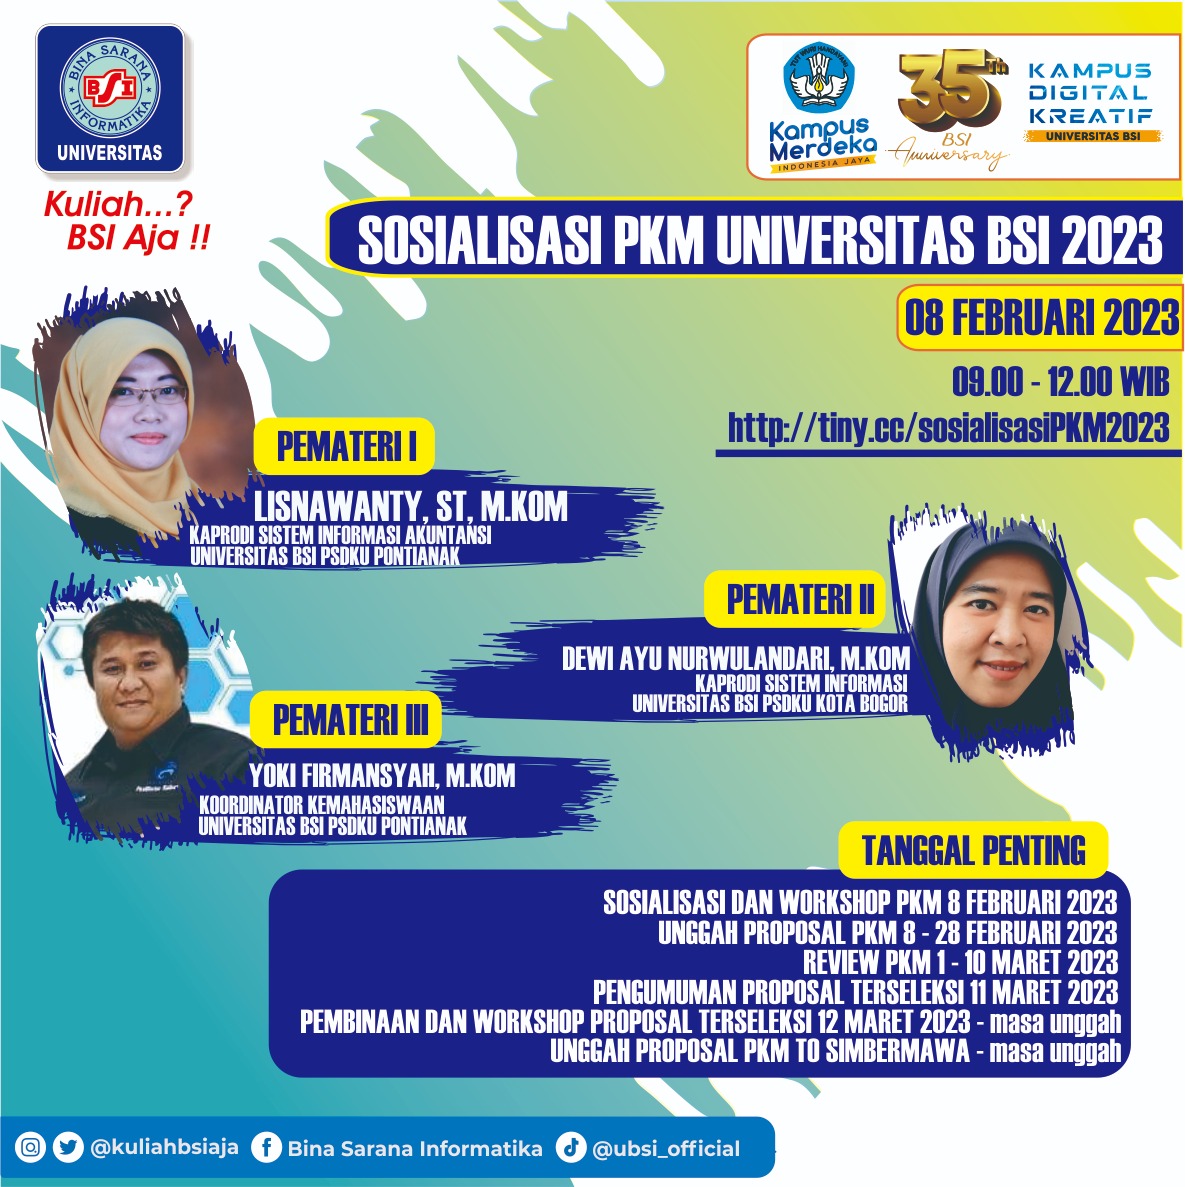 Sosialisasi PKM Universitas BSI 2023